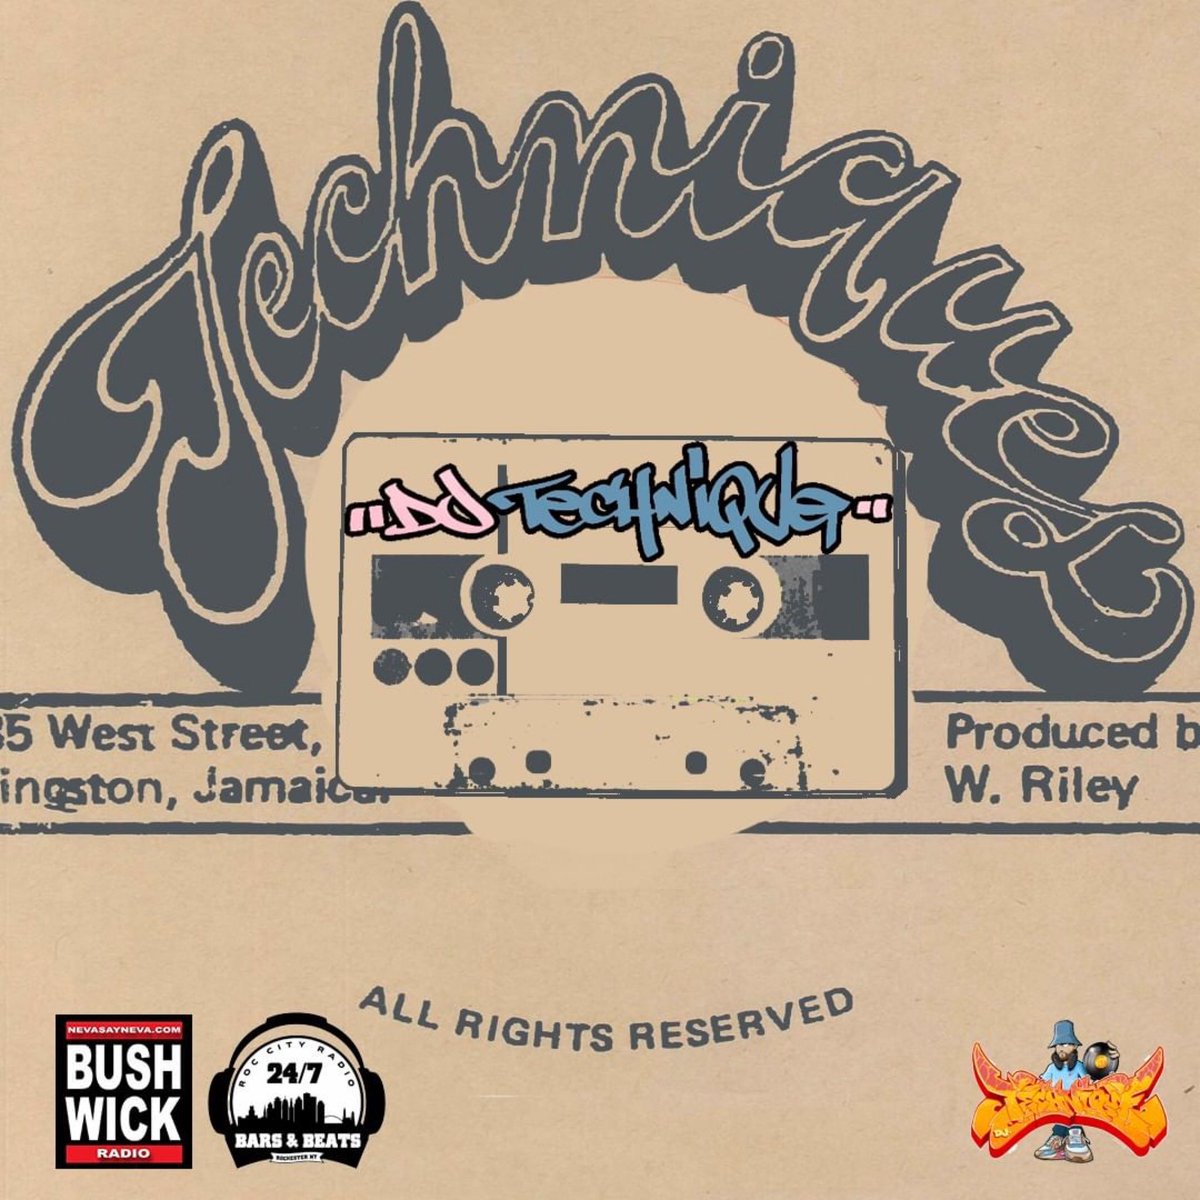 Going live tomorrow:
SATURDAY MIXTAPE LIVE vol.79
with DJ TECHNIQUE @djtechniquebris (Sat 31st March 2023) ~ Tune into the freshest #BoomBap #HipHop #DJ mix this Saturday from: 3-5pm UK GMT+ time / 10-12pm NYC / 7-9am LA time #liveDJ #djmix #DJset #newmusic #hiphopmix #scratchdj